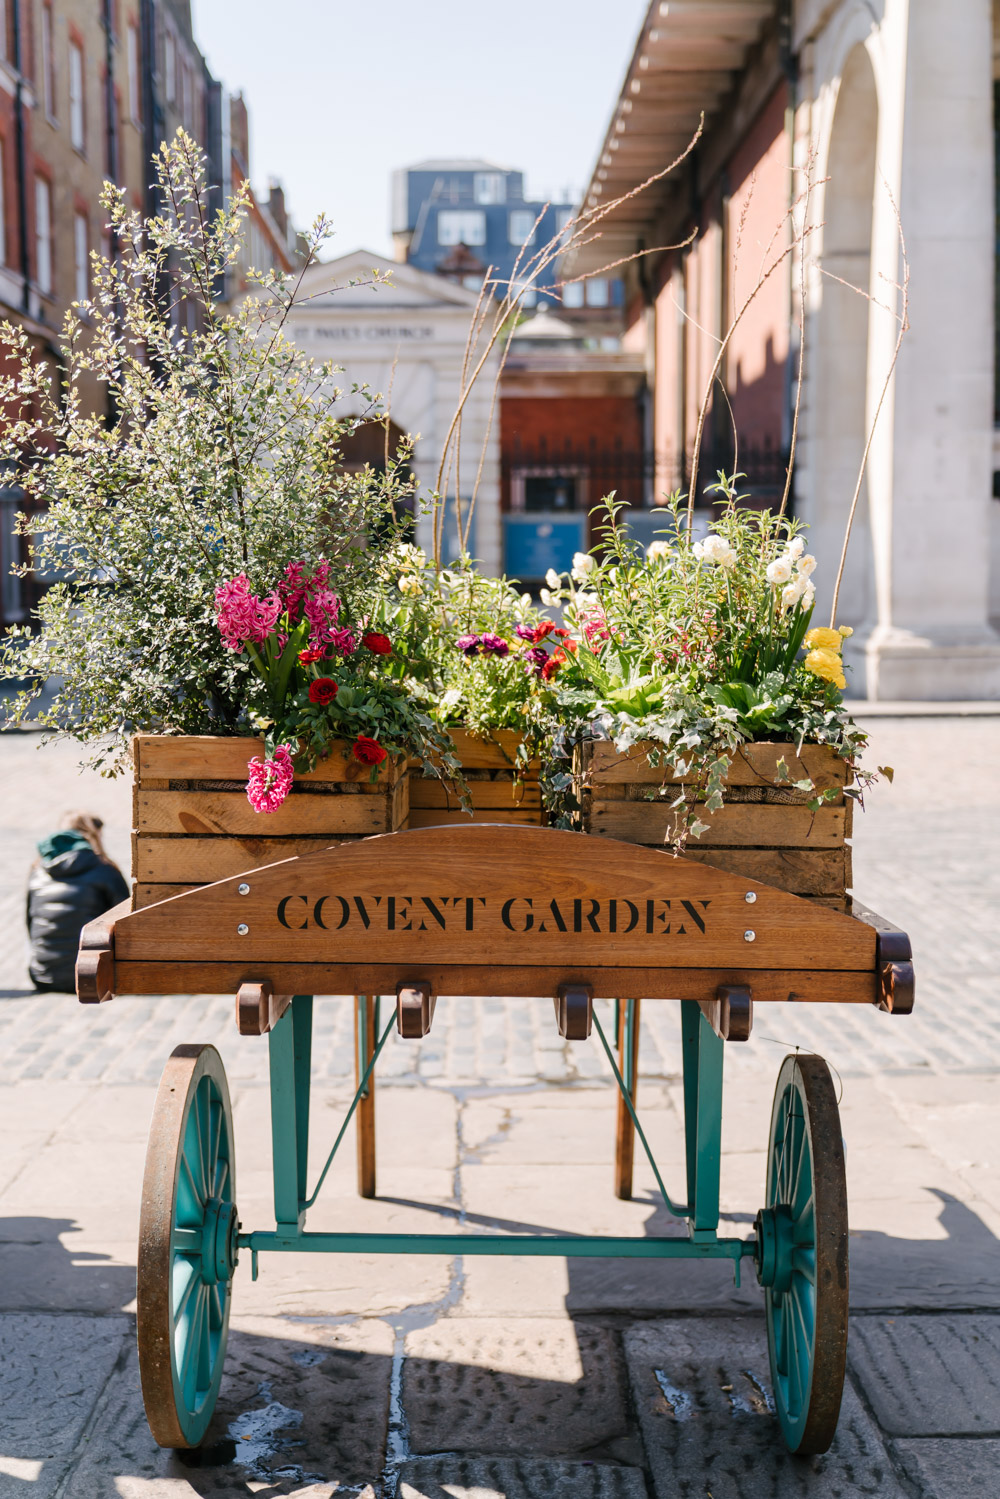 Covent garden wooden flowers